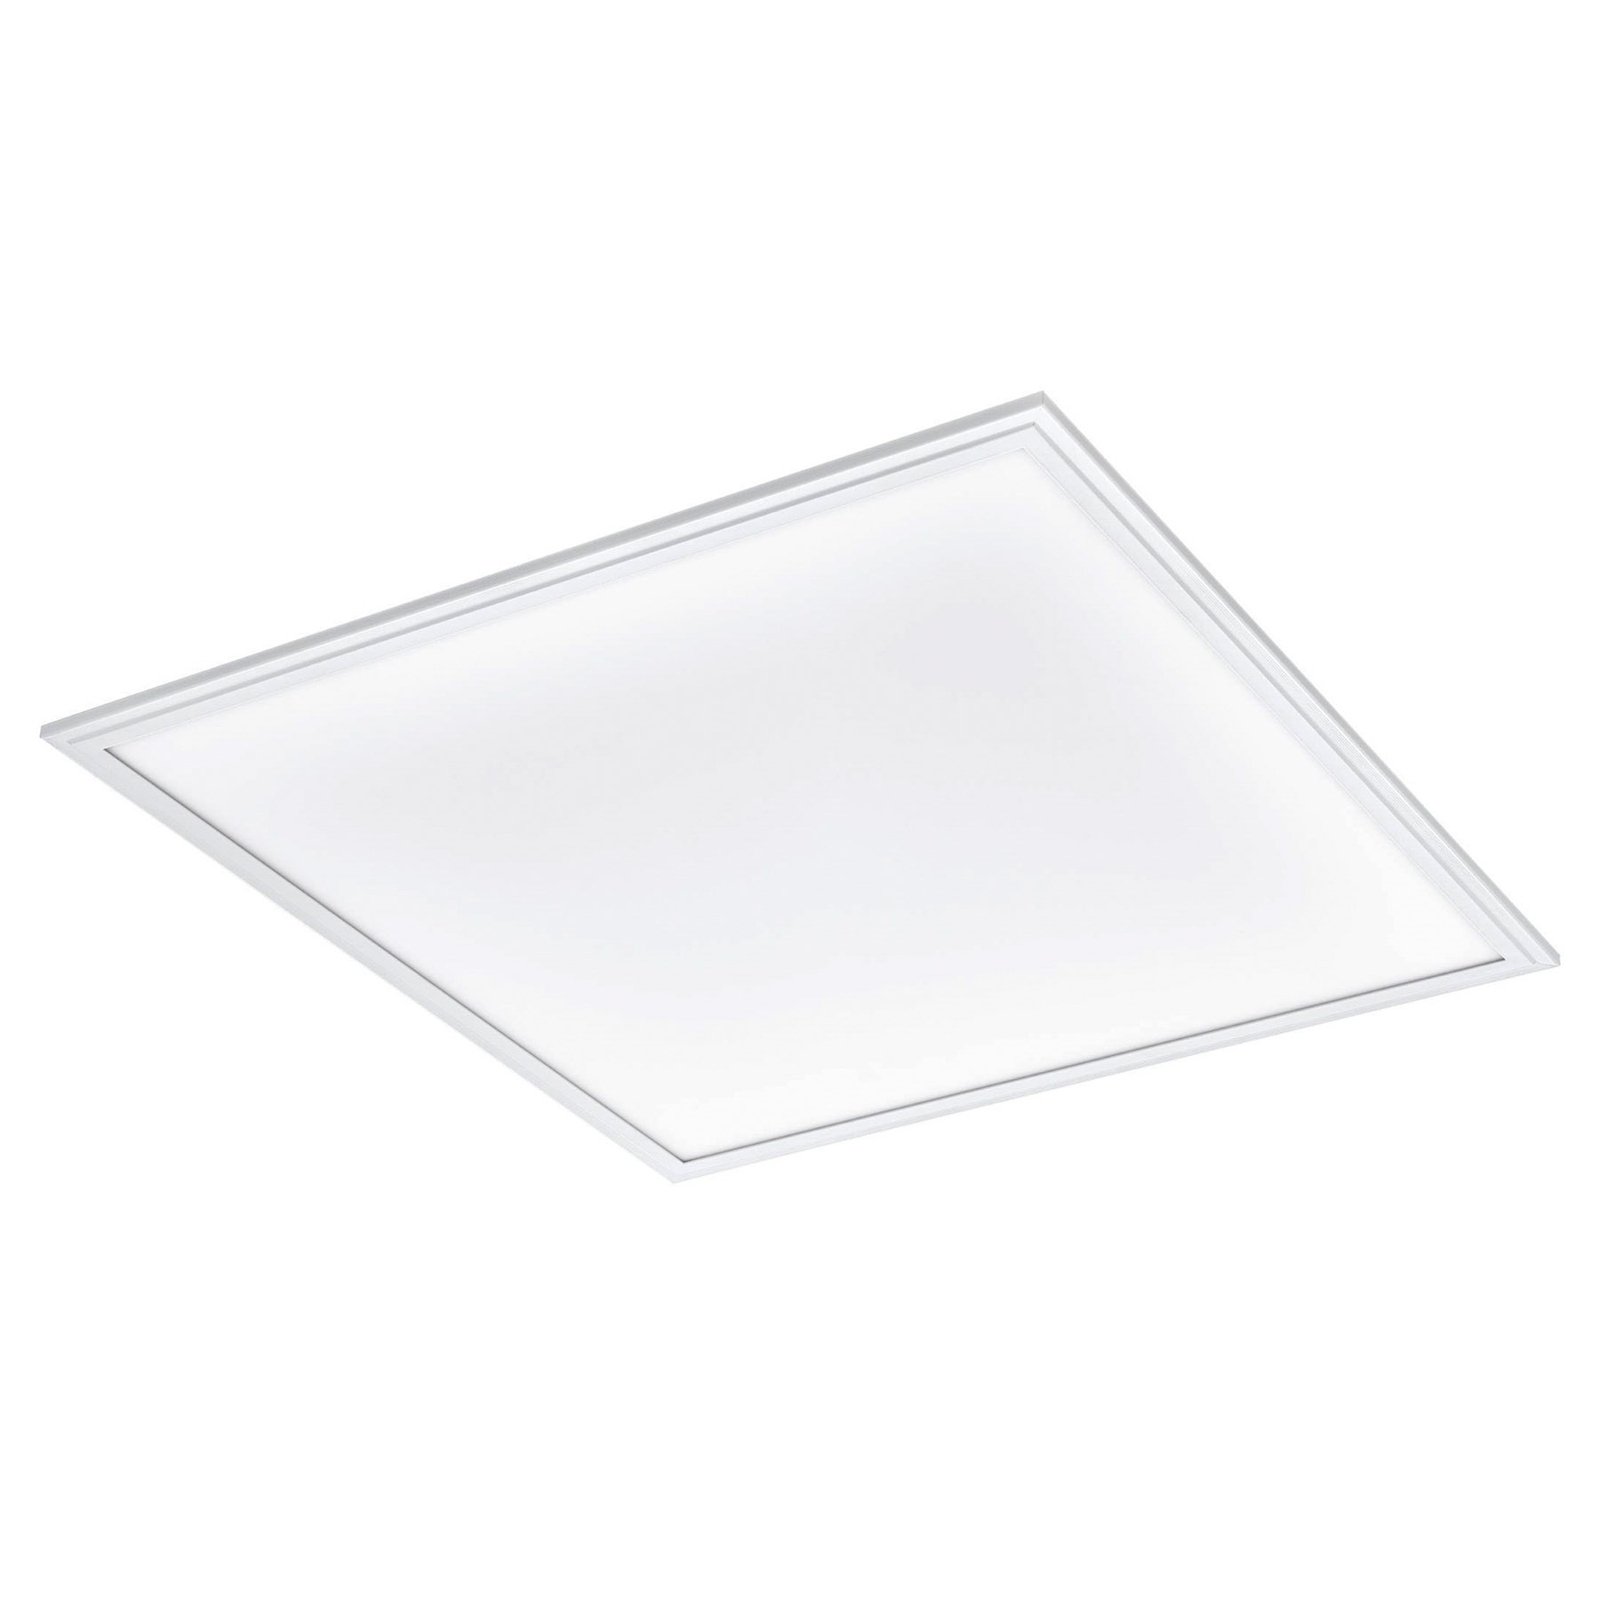 EGLO connect CCT ceiling lamp 59.5 x 59.5 cm white